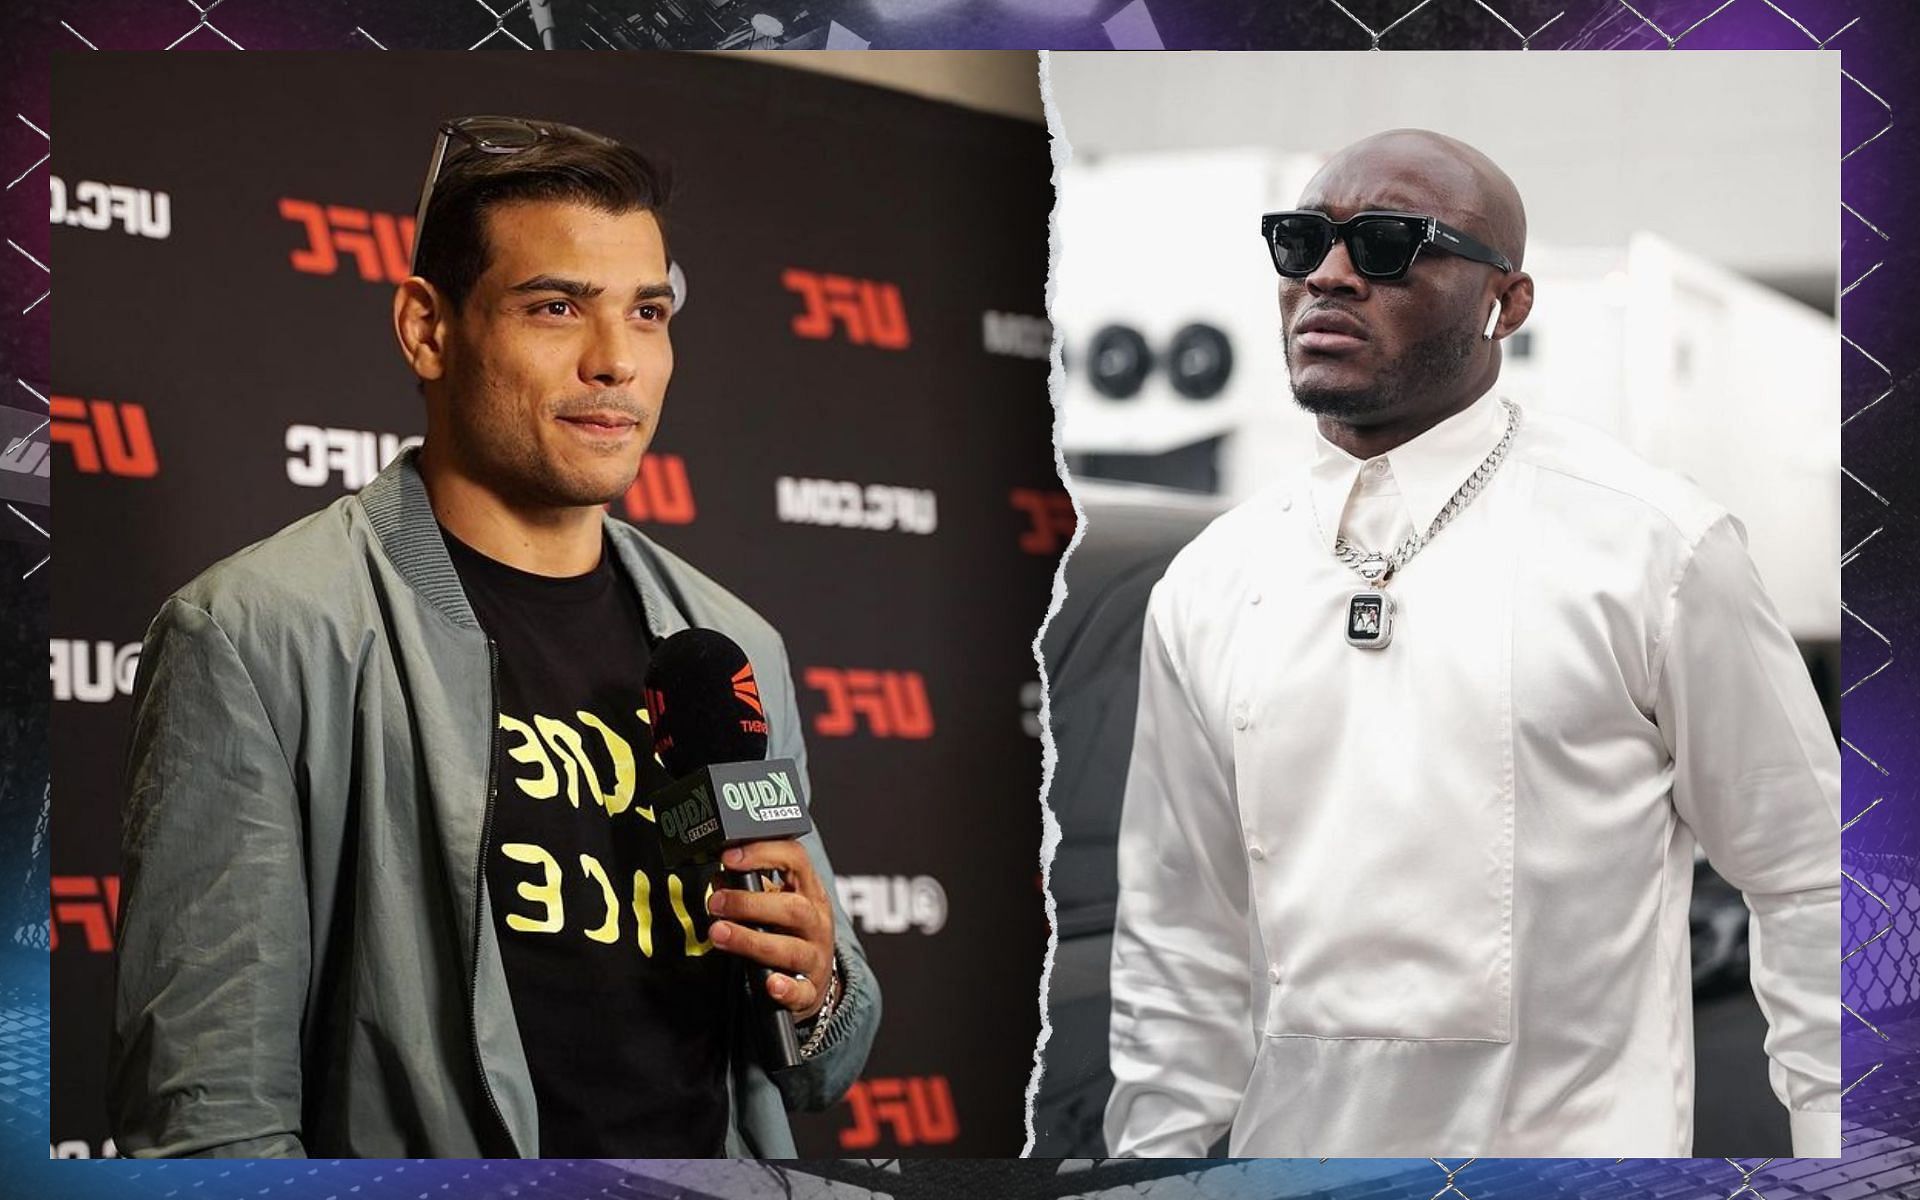 Ali Abdelaziz responds to Paulo Costa (left) calling out Kamaru Usman (right) for a middleweight bout, [Image credits: @PauloCosta &amp; @KamaruUsman on Instagram]